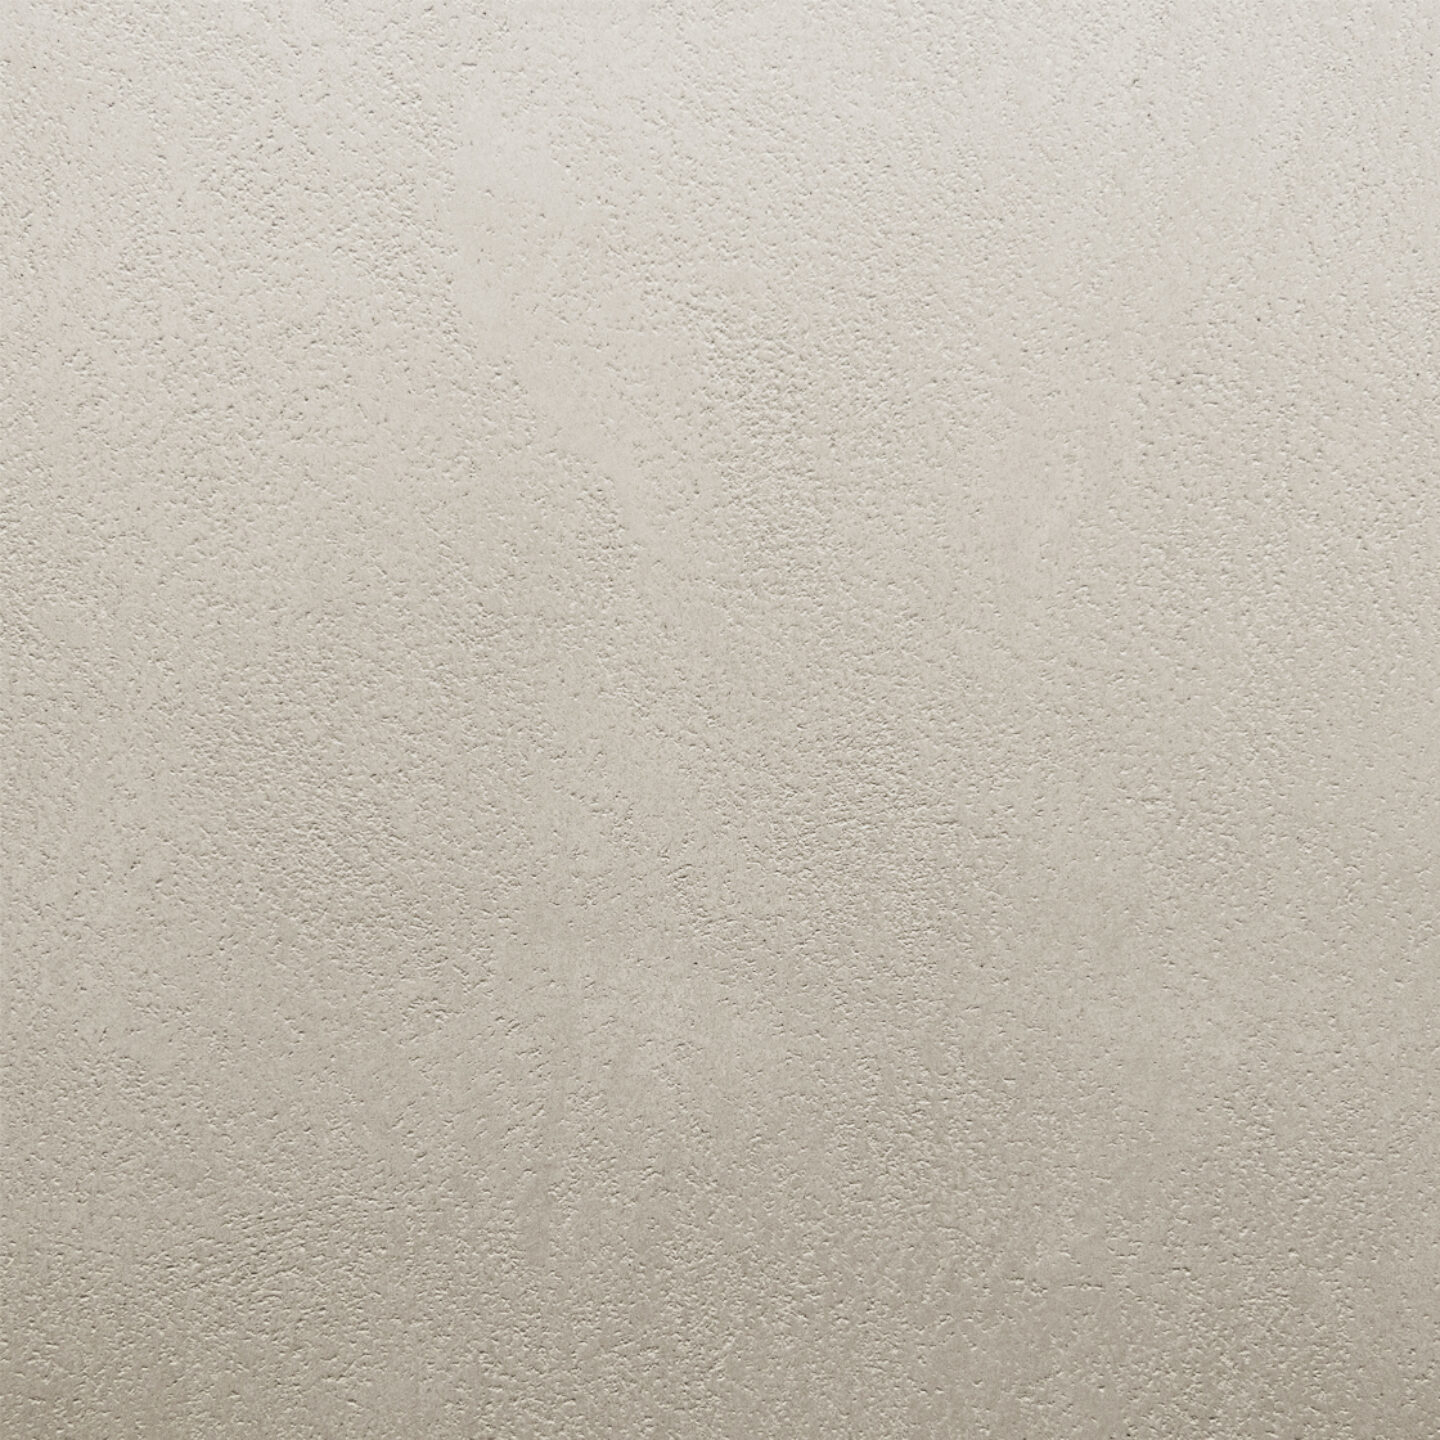 Close up of Armourcoat leatherstone exterior polished plaster finish - 09